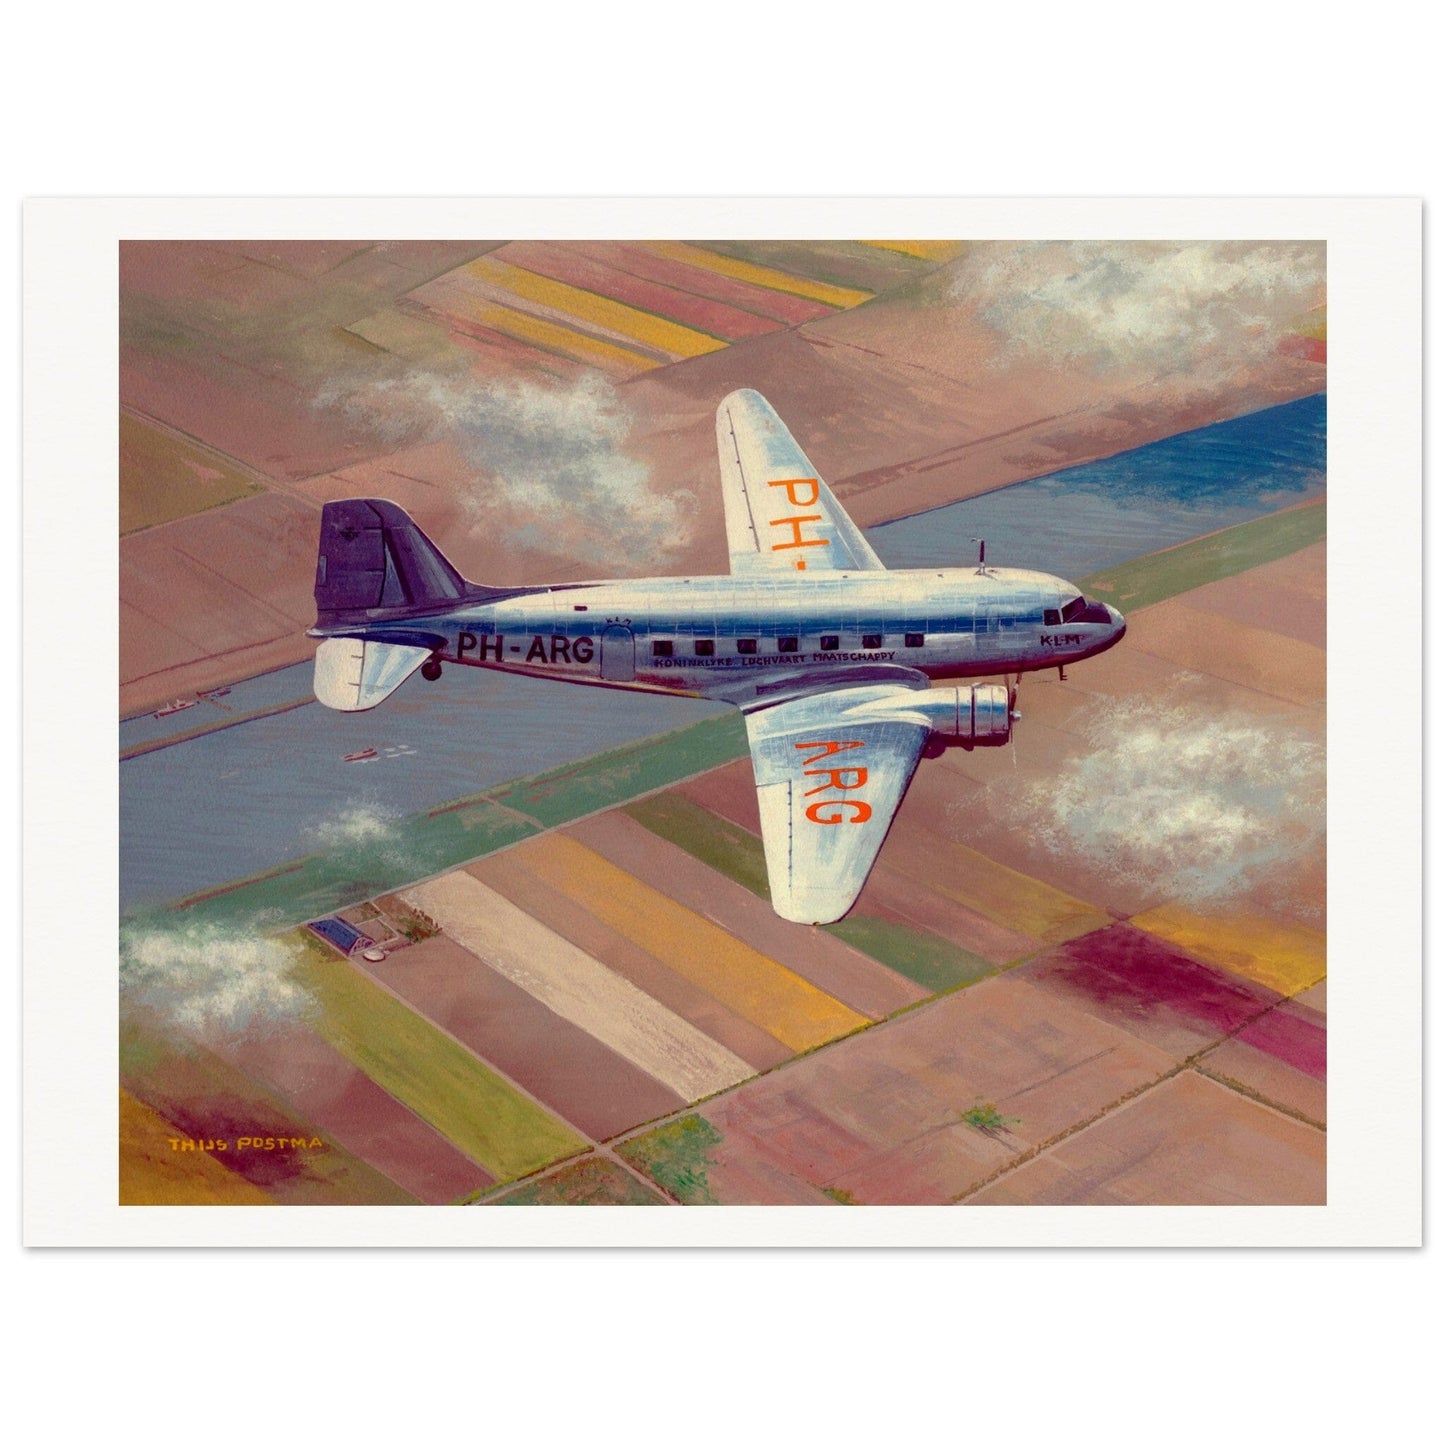 Thijs Postma - Poster - Douglas DC-3 PH-ARG Over Bollenstreek Poster Only Gelato 60x80 cm / 24x32″ 